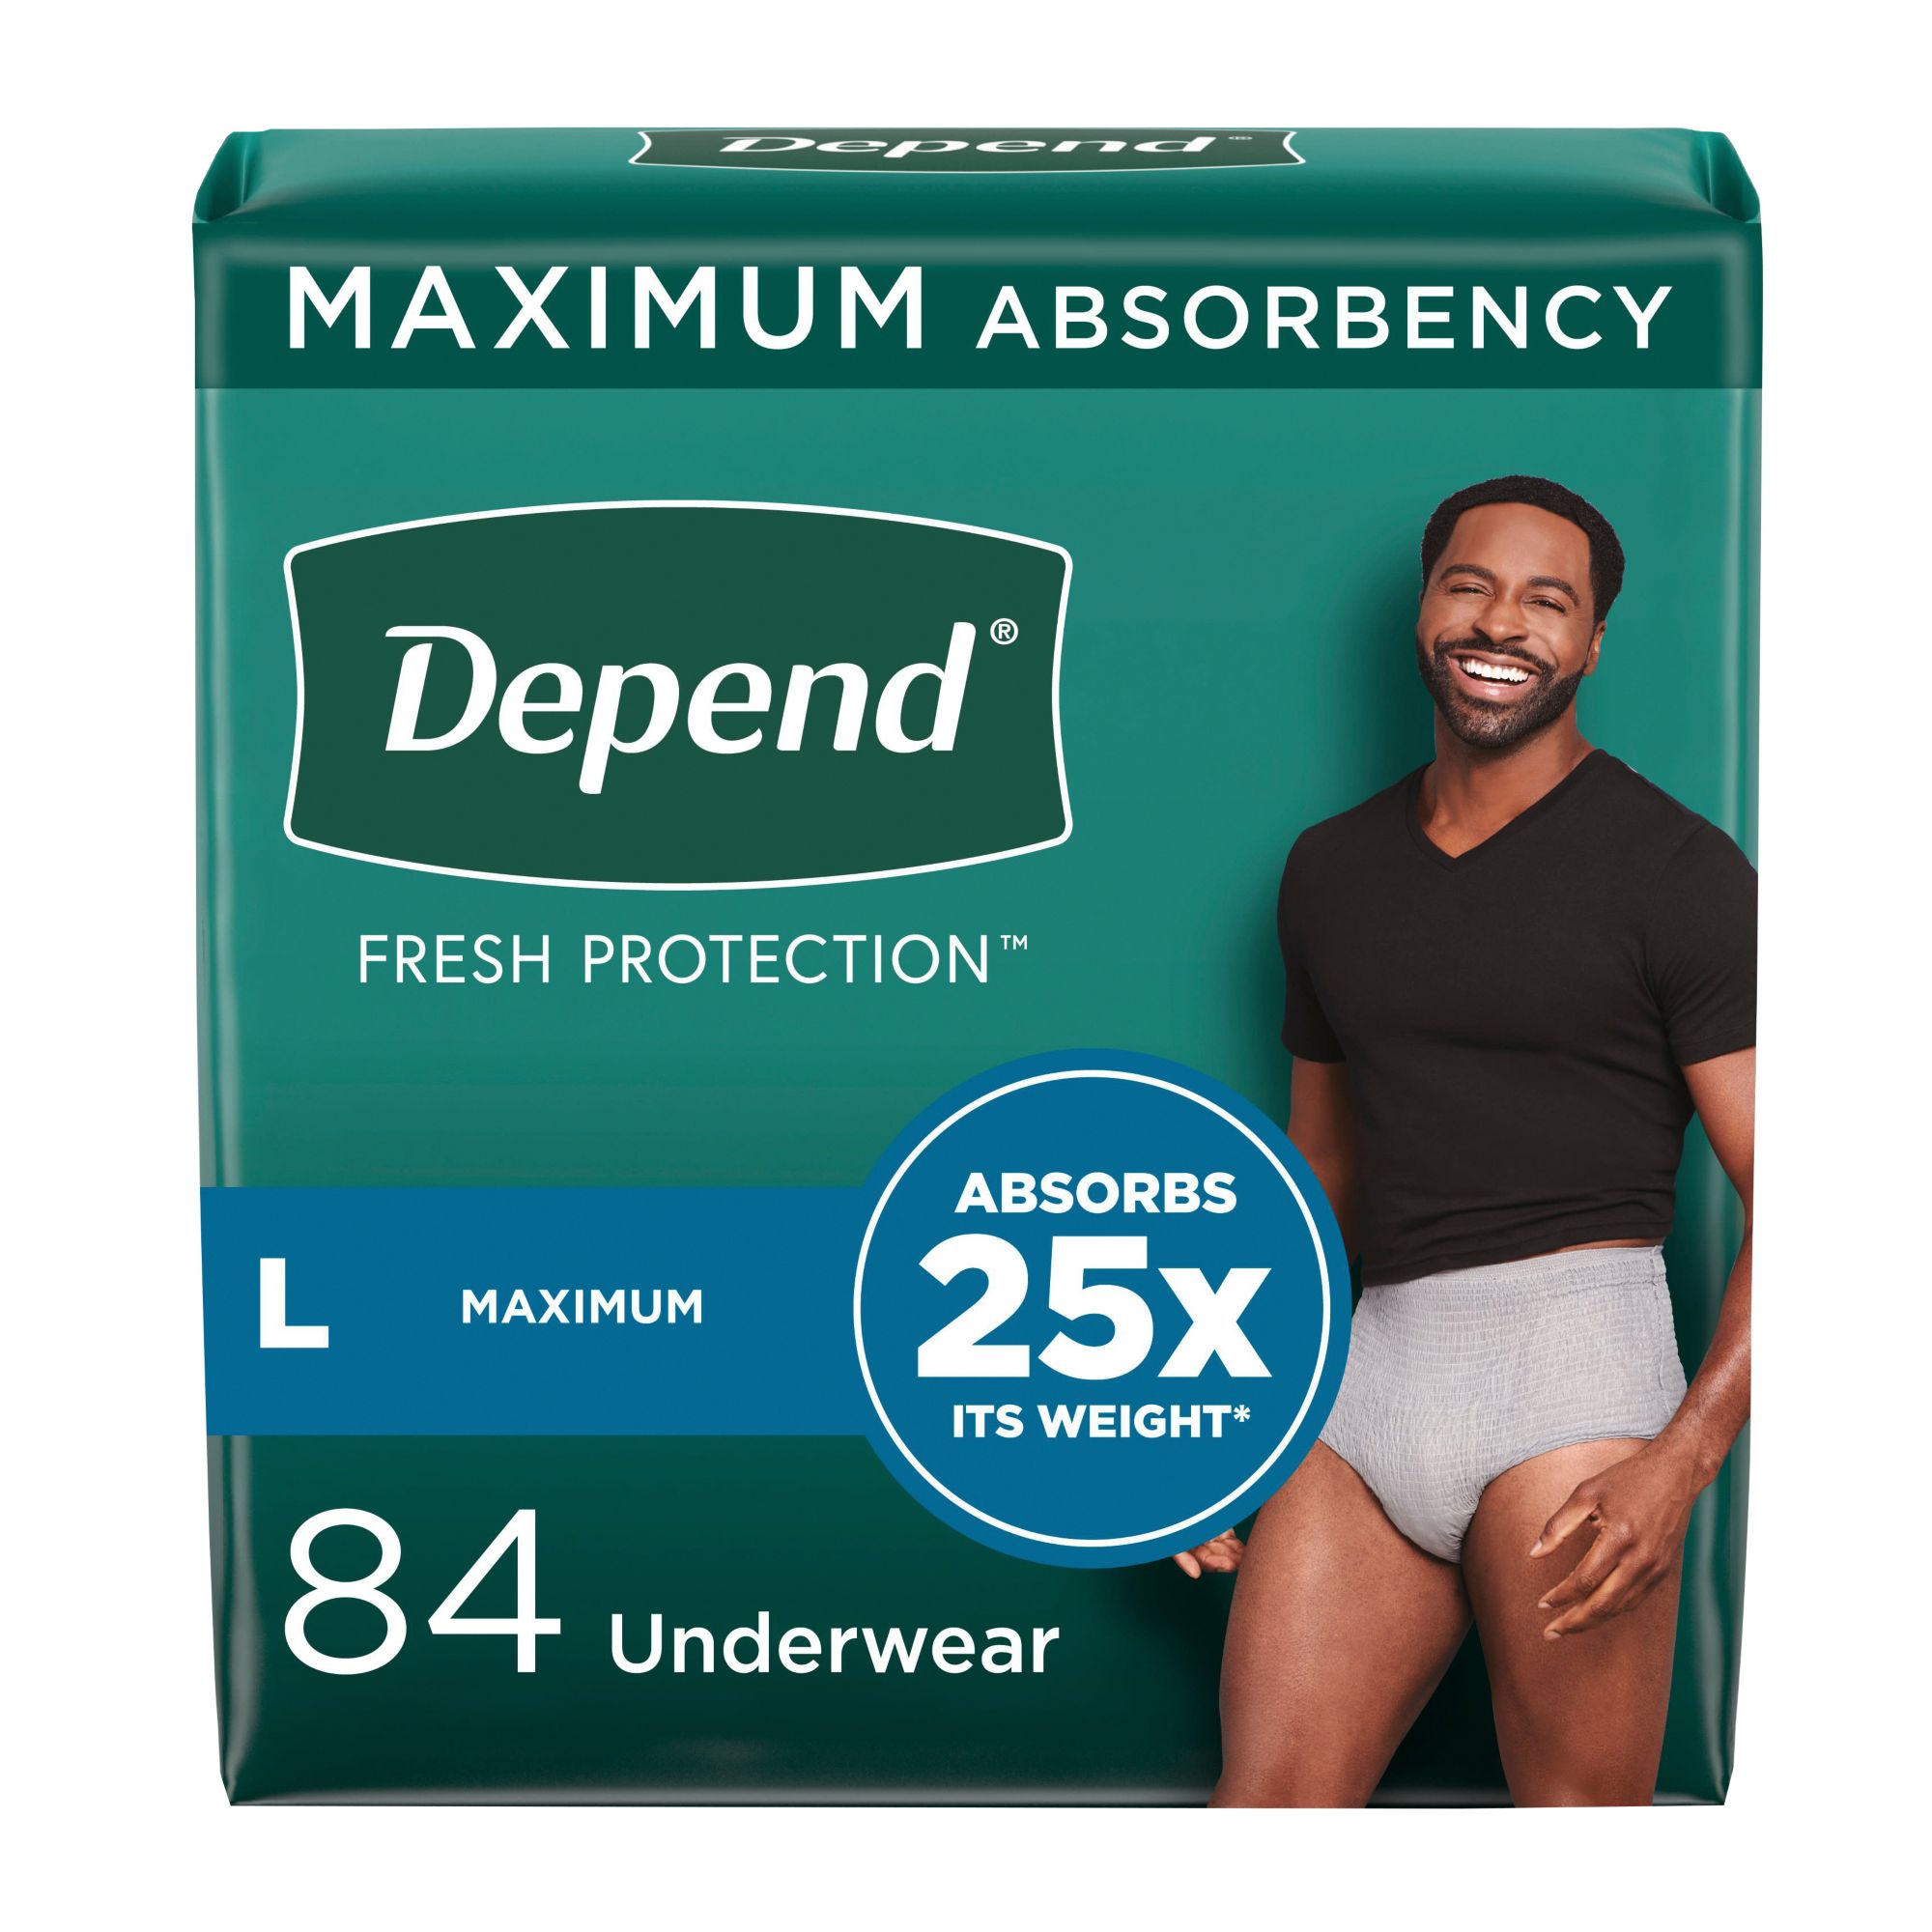 Buy Prevail Per-Fit Absorbent Underwear for Women : Best Price in